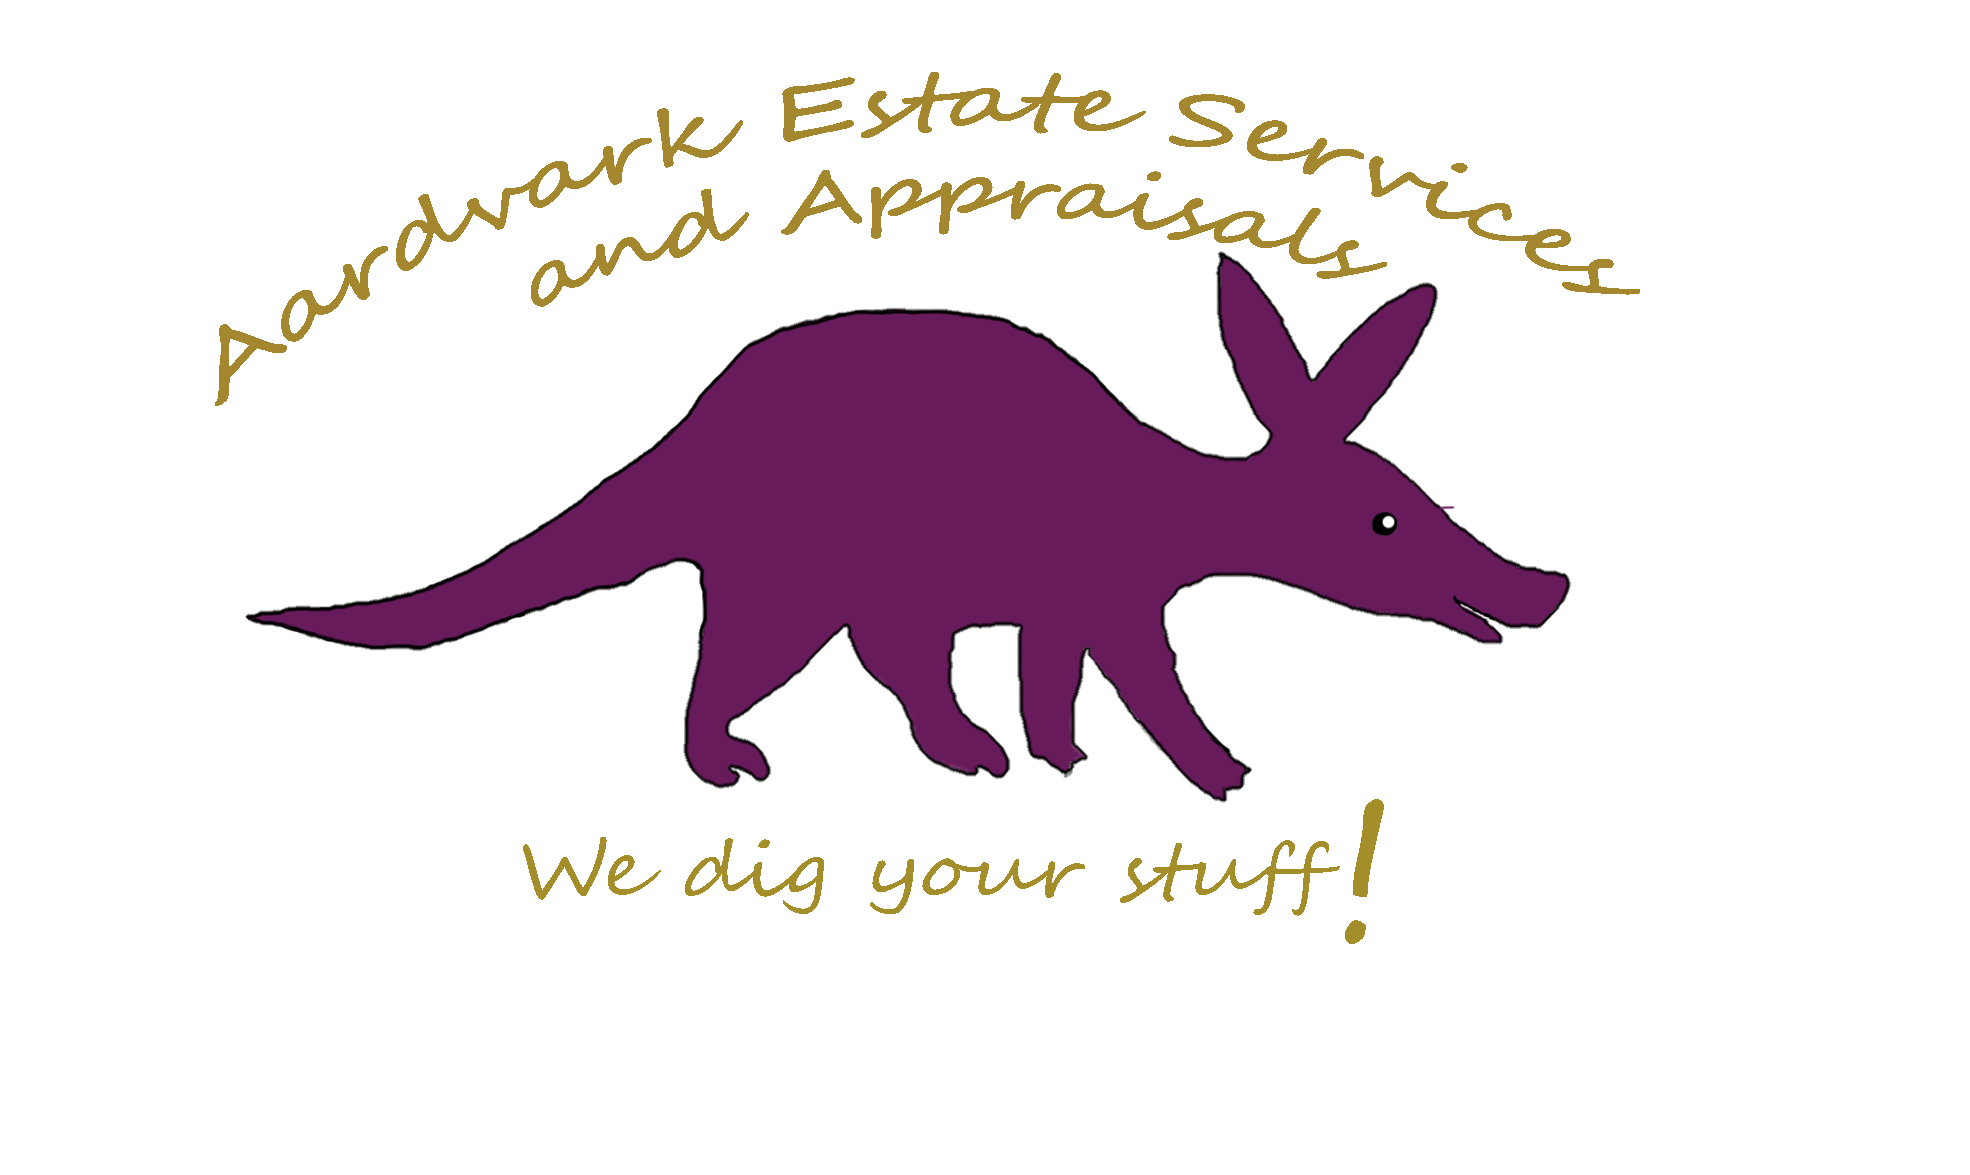 Aardvark Estate Services and Appraisals, LLC | AuctionNinja